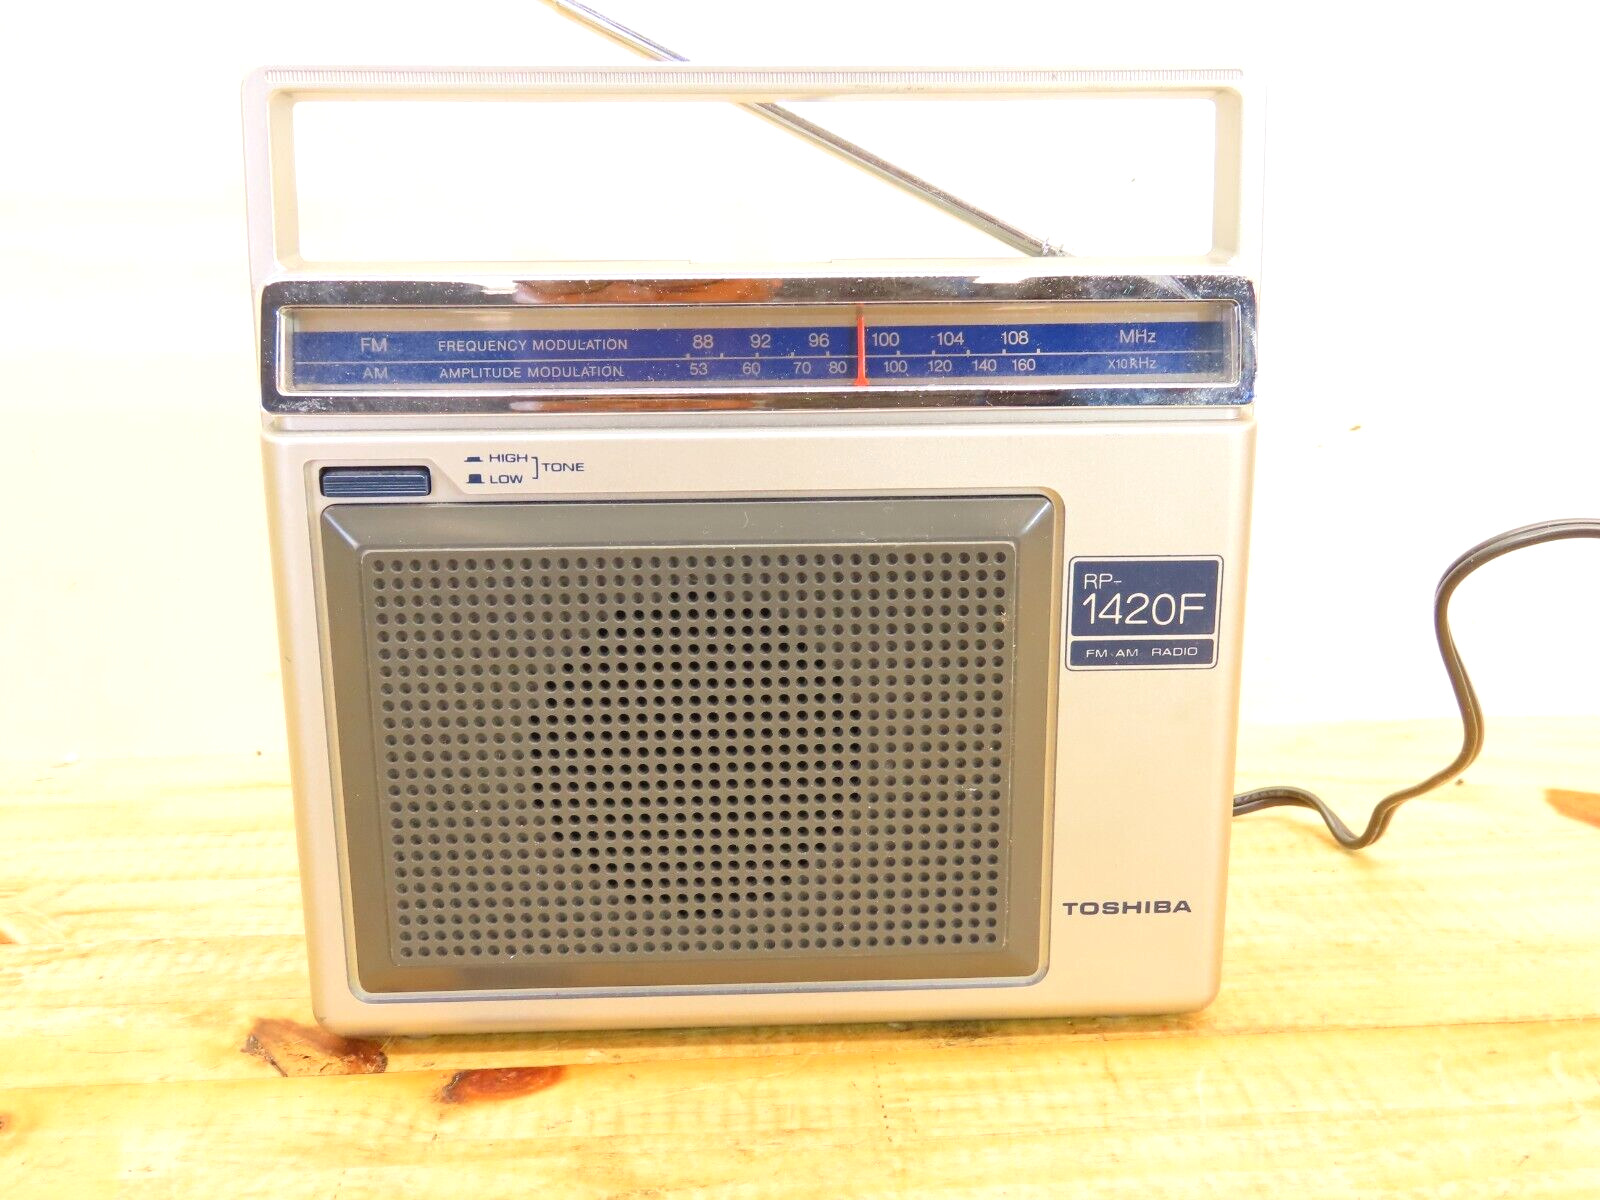 Vintage TOSHIBA RP-1420F AM/FM Radio Tested & Works